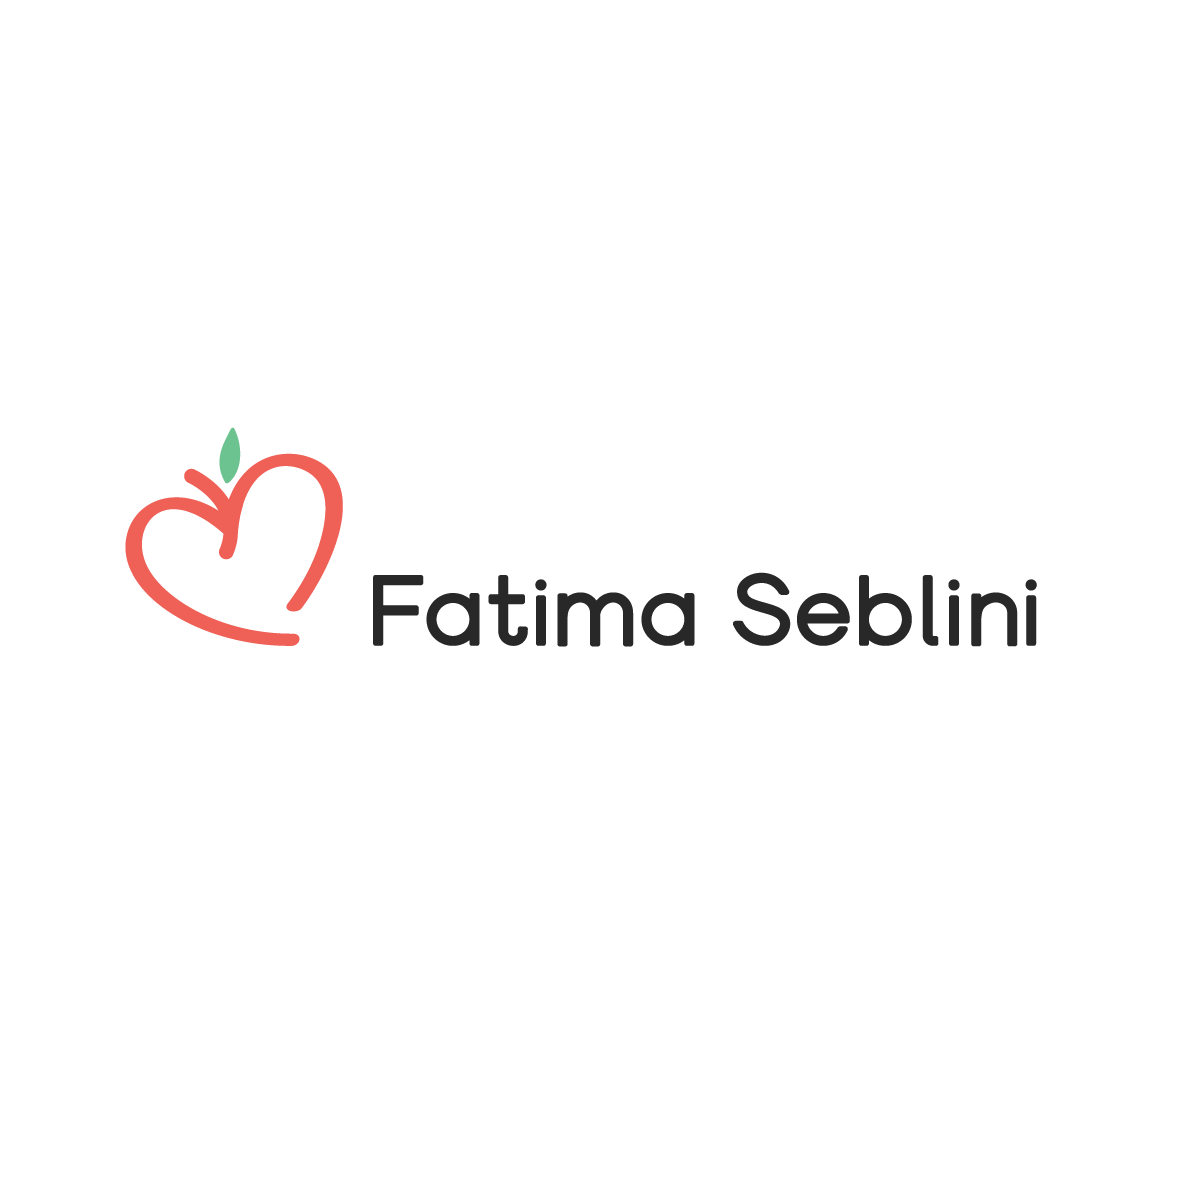 Dietitian Fatima Seblini